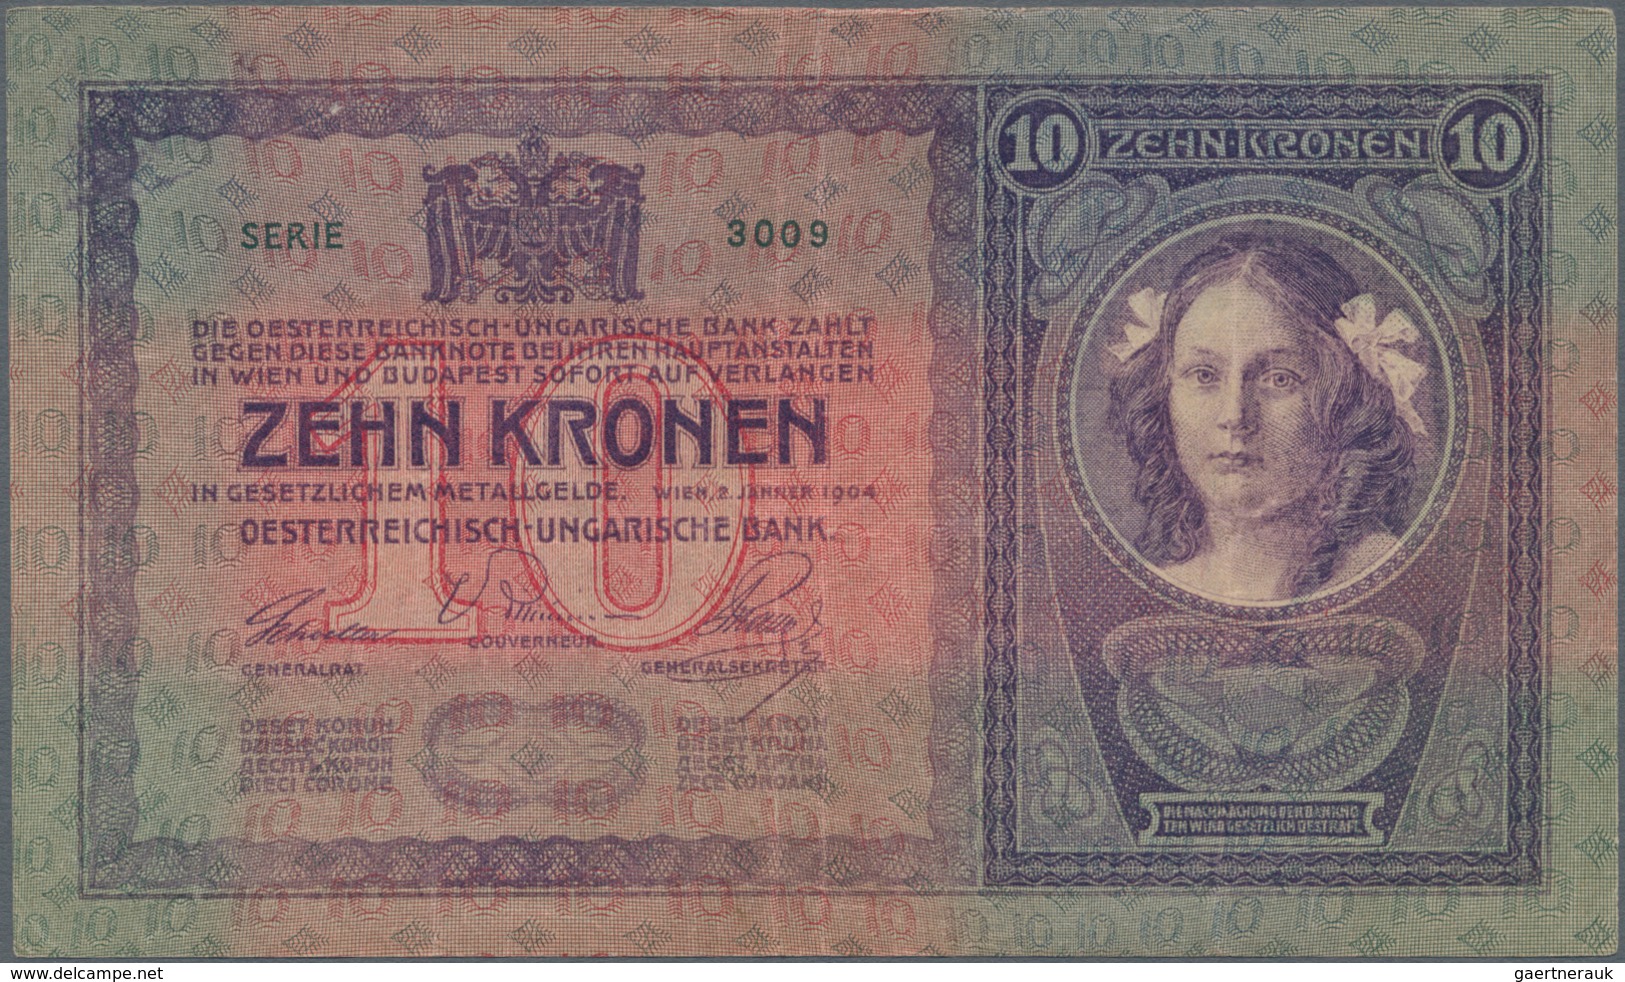 Austria / Österreich: Set with 15 pcs. 10 Kronen 1904, P.9 in about F+ to VF condition. (15 pcs.)